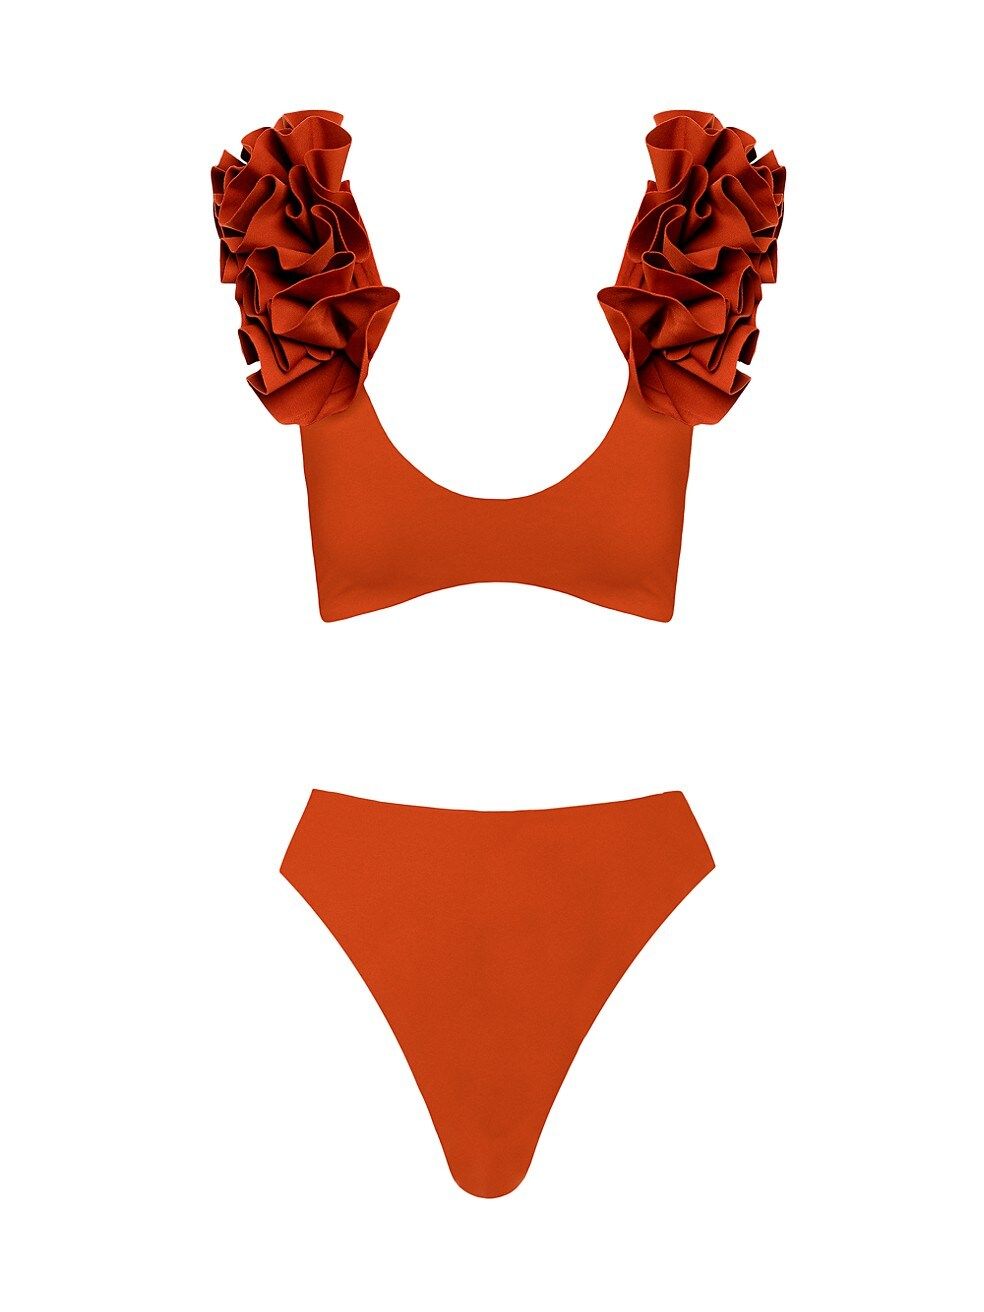 Maygel Coronel Juanita Ruffled Bikini | Saks Fifth Avenue